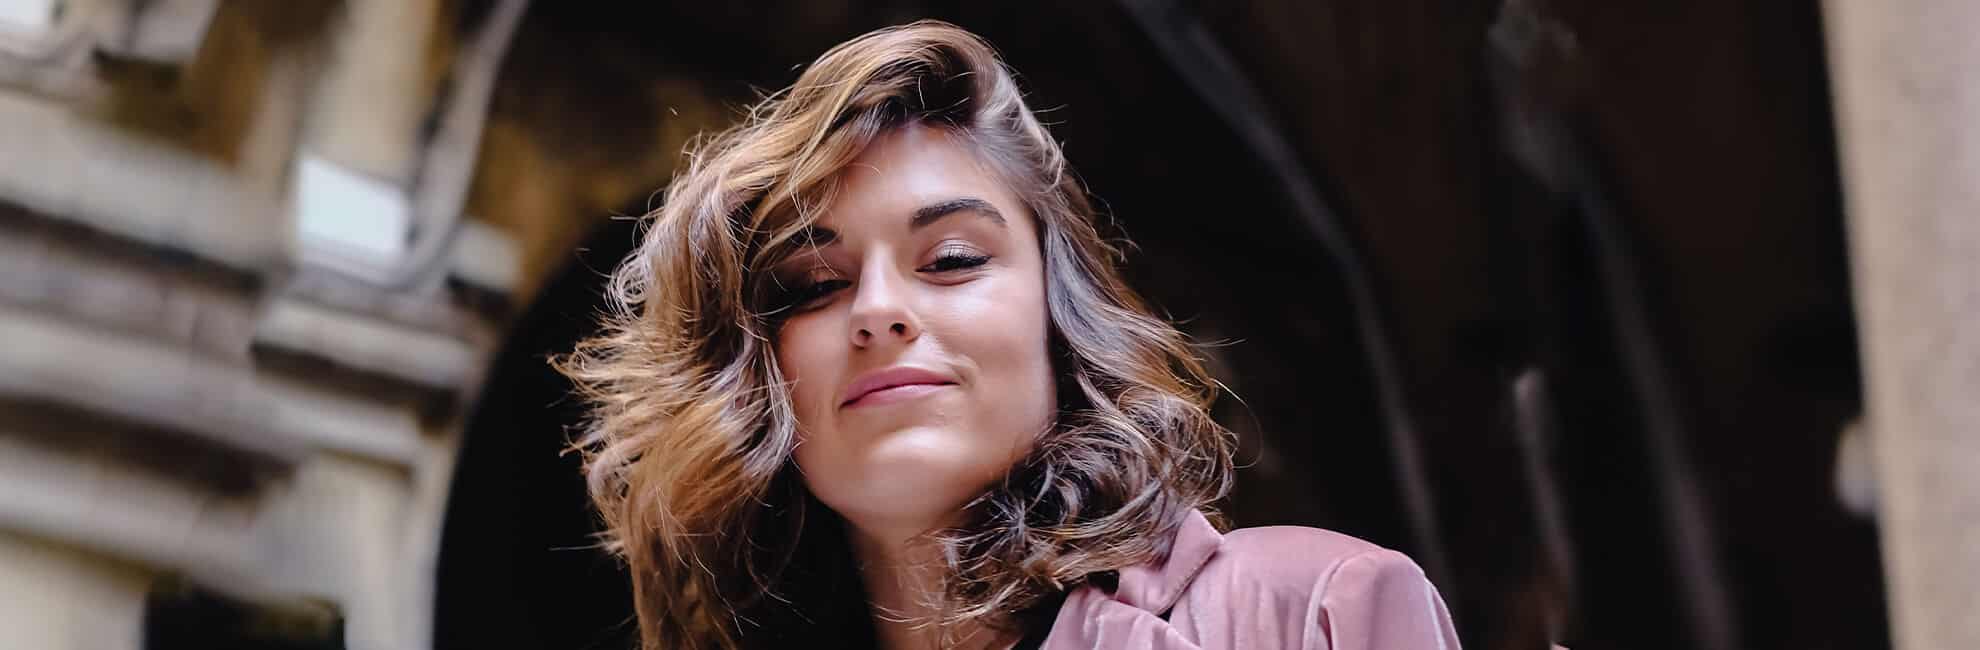 8 Hair Artist Tips To Make Thin Hair Look Thicker | Rossano Ferretti